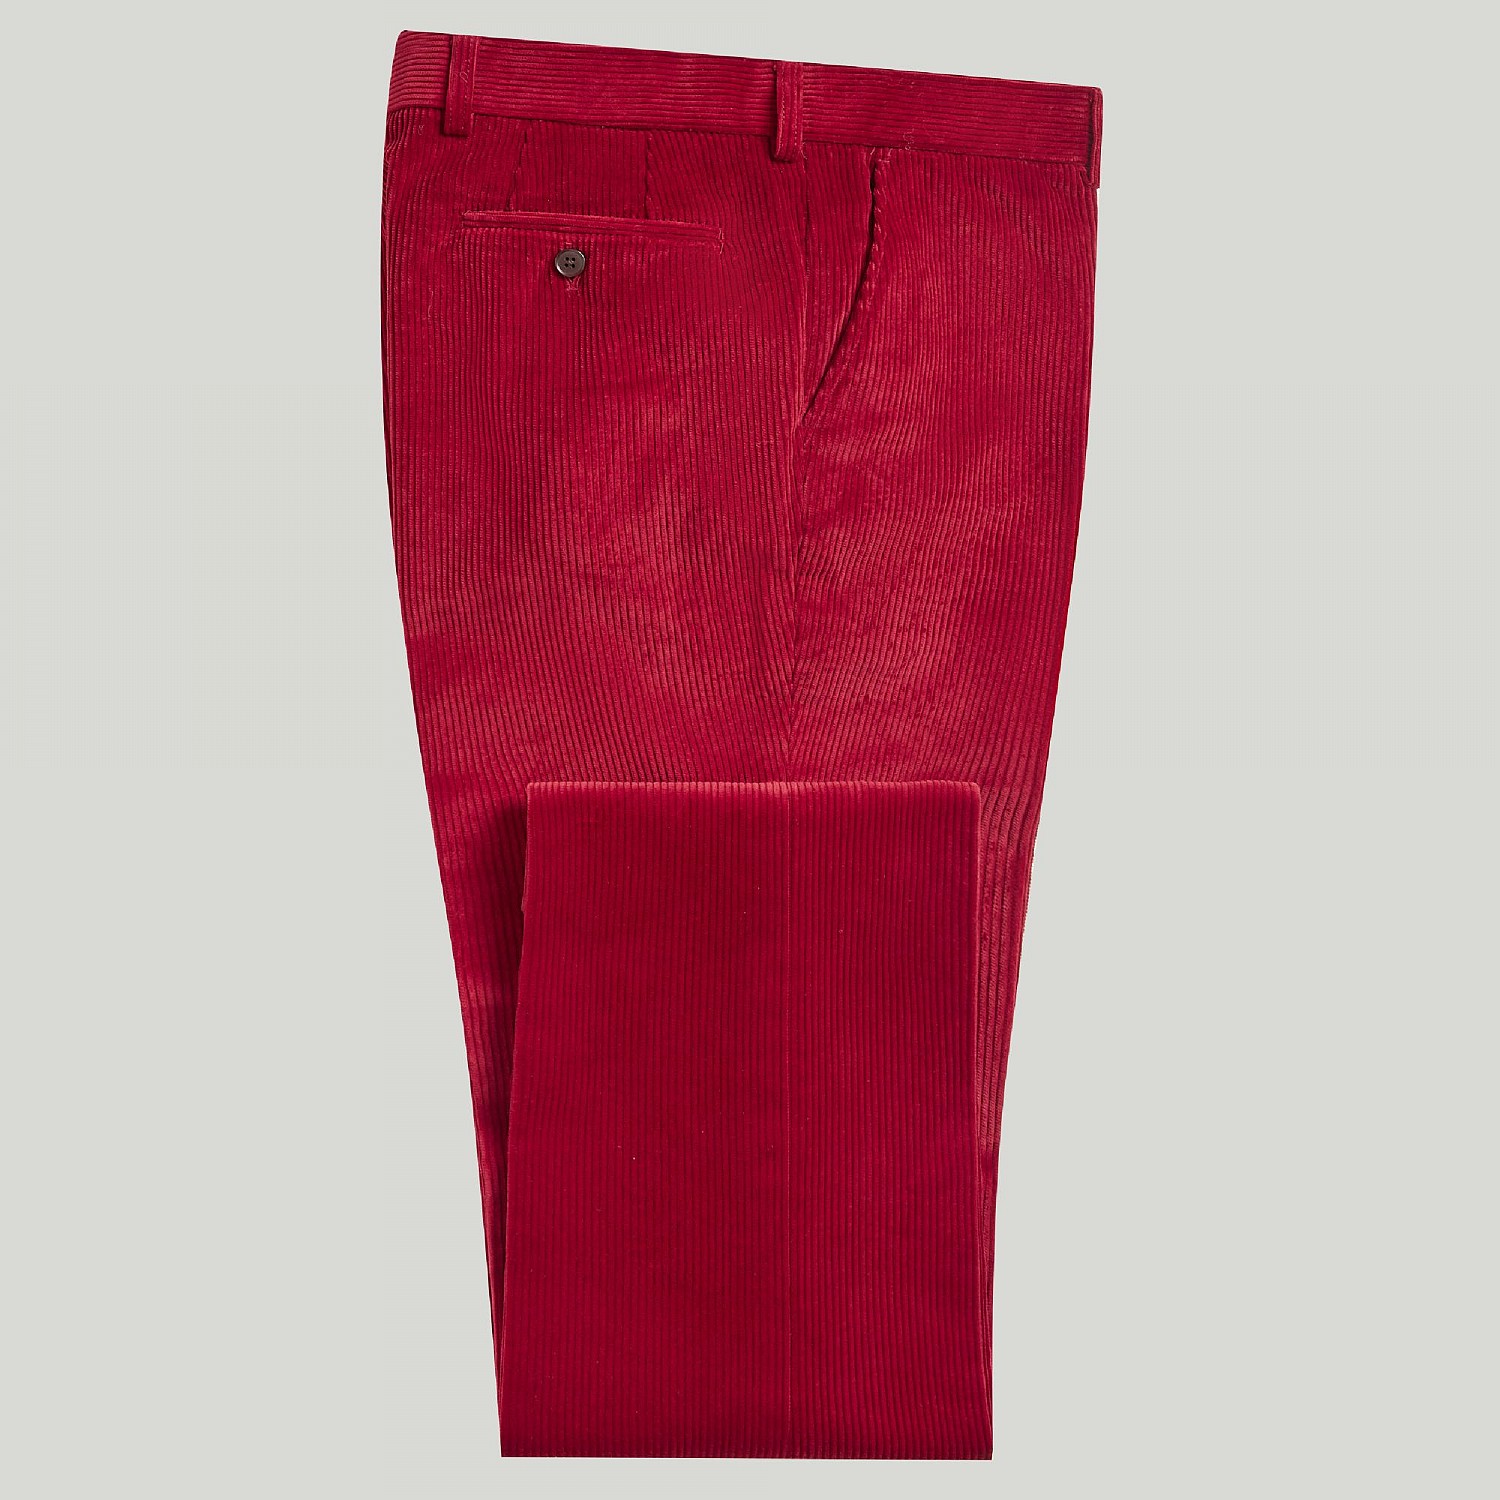 Corduroy trousers  Dark red  Kids  HM IN